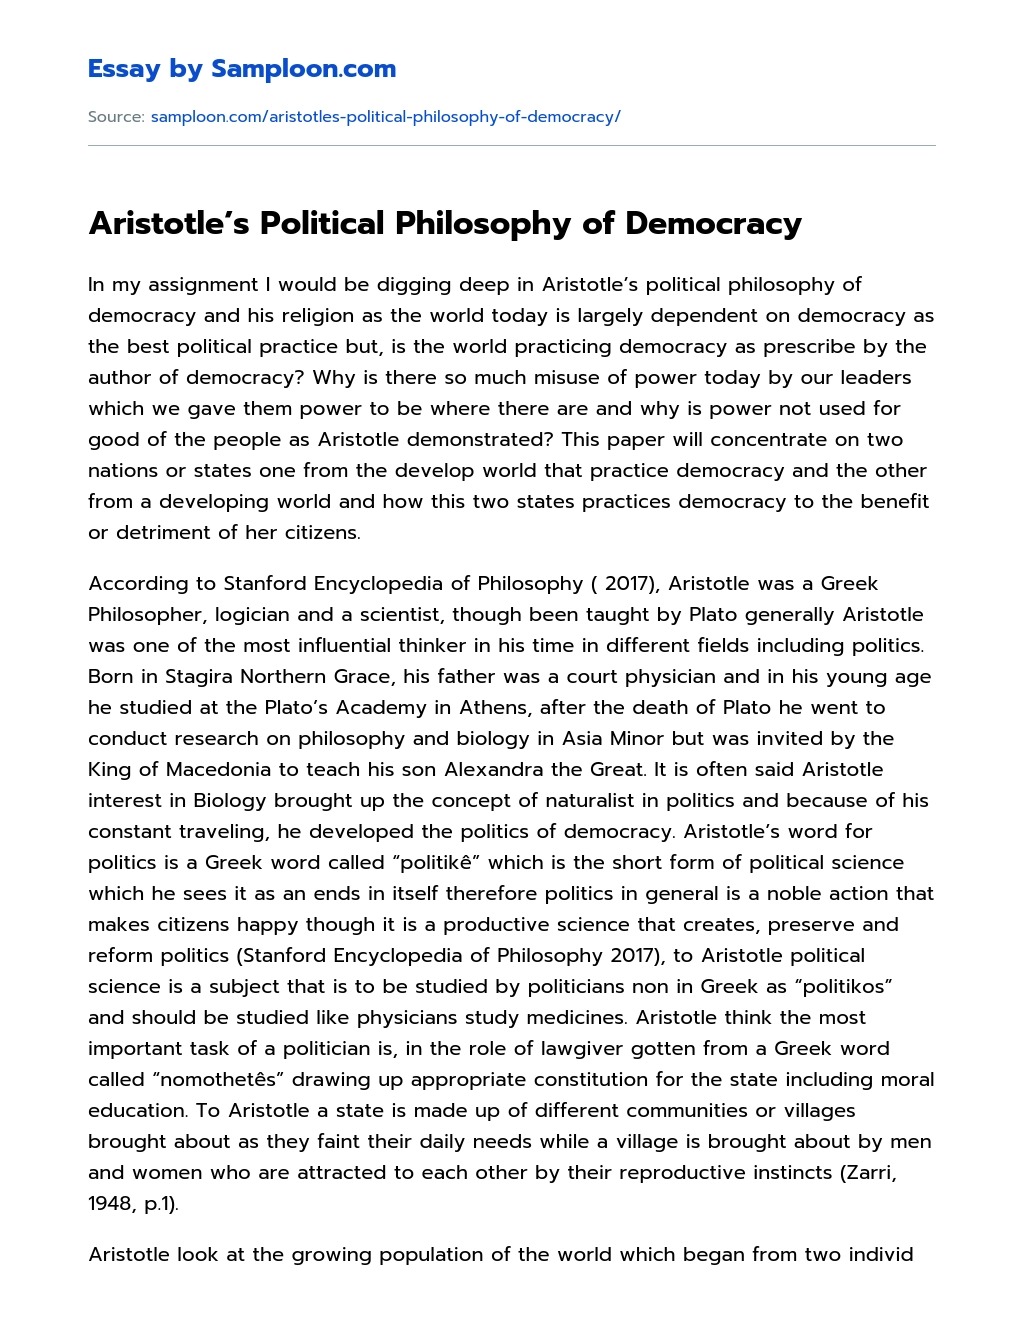 Aristotle’s Political Philosophy of Democracy essay